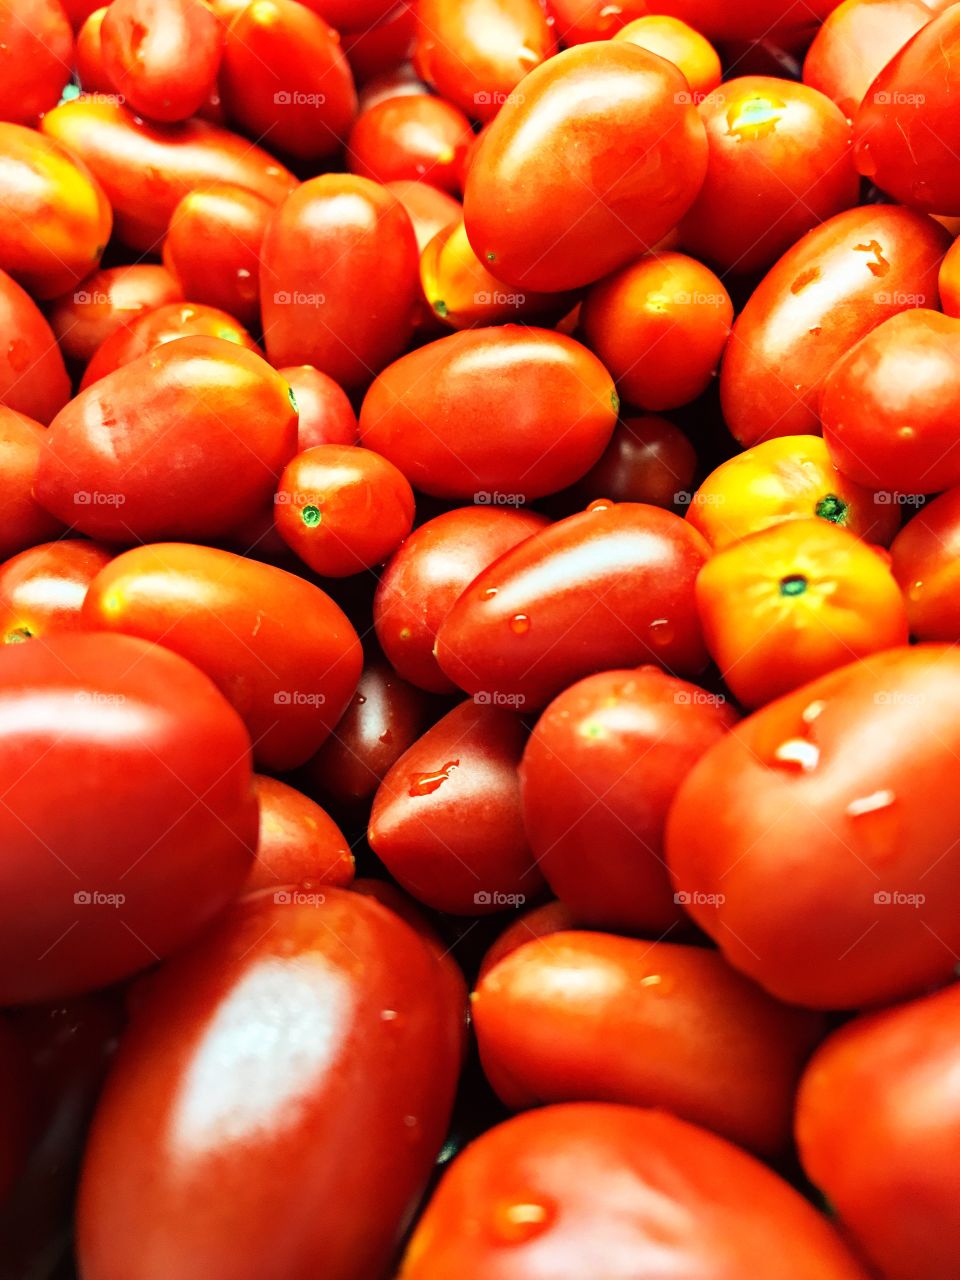 Tomato red delicious yummy